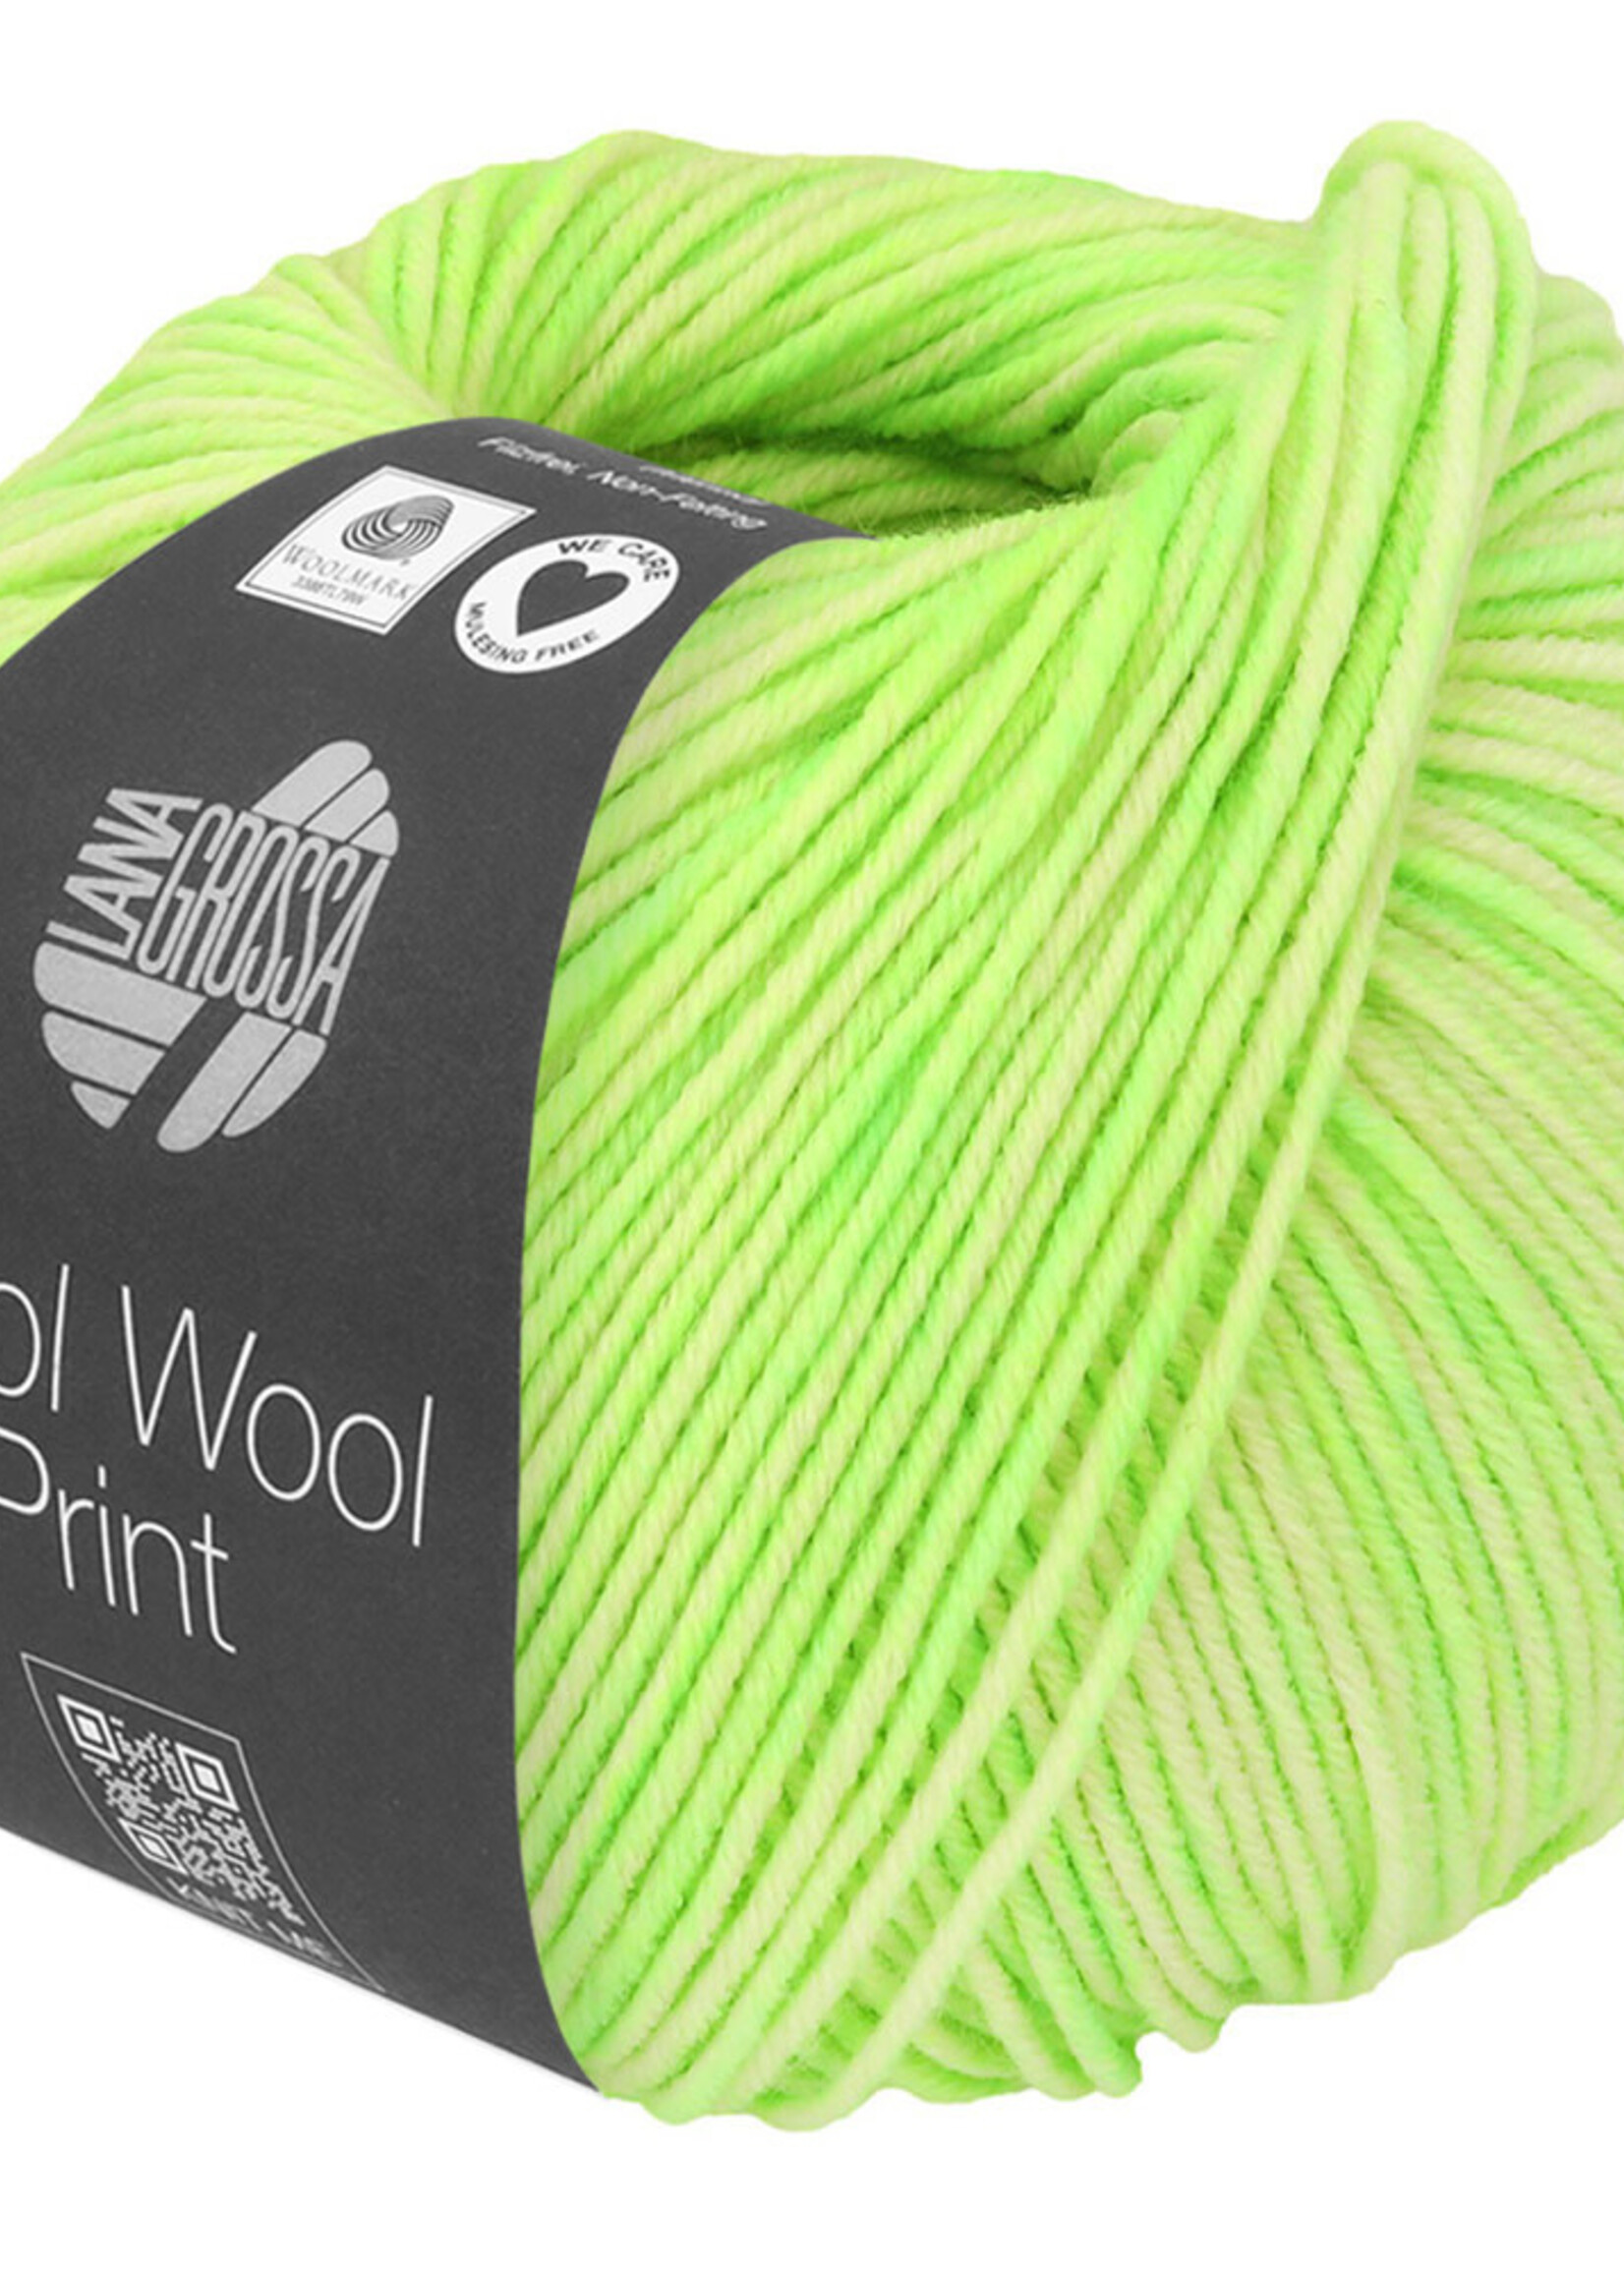 Lana Grossa Cool Wool Neon Print - Lana Grossa 6522-neon groen/zachtgroen